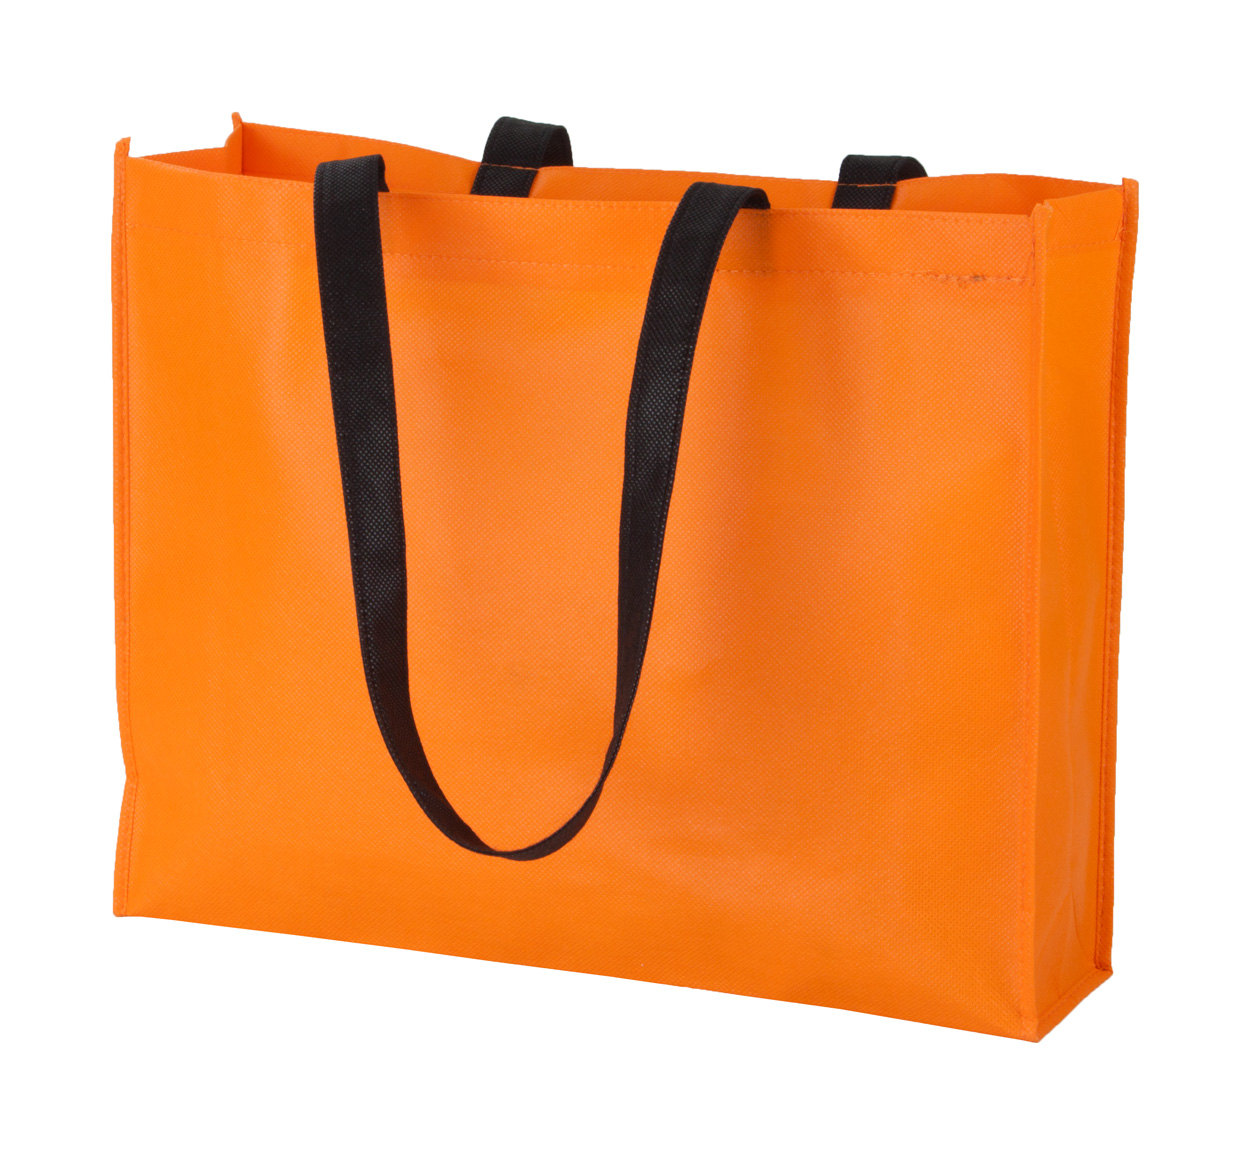 Nákupní taška TUCSON z netkané textilie